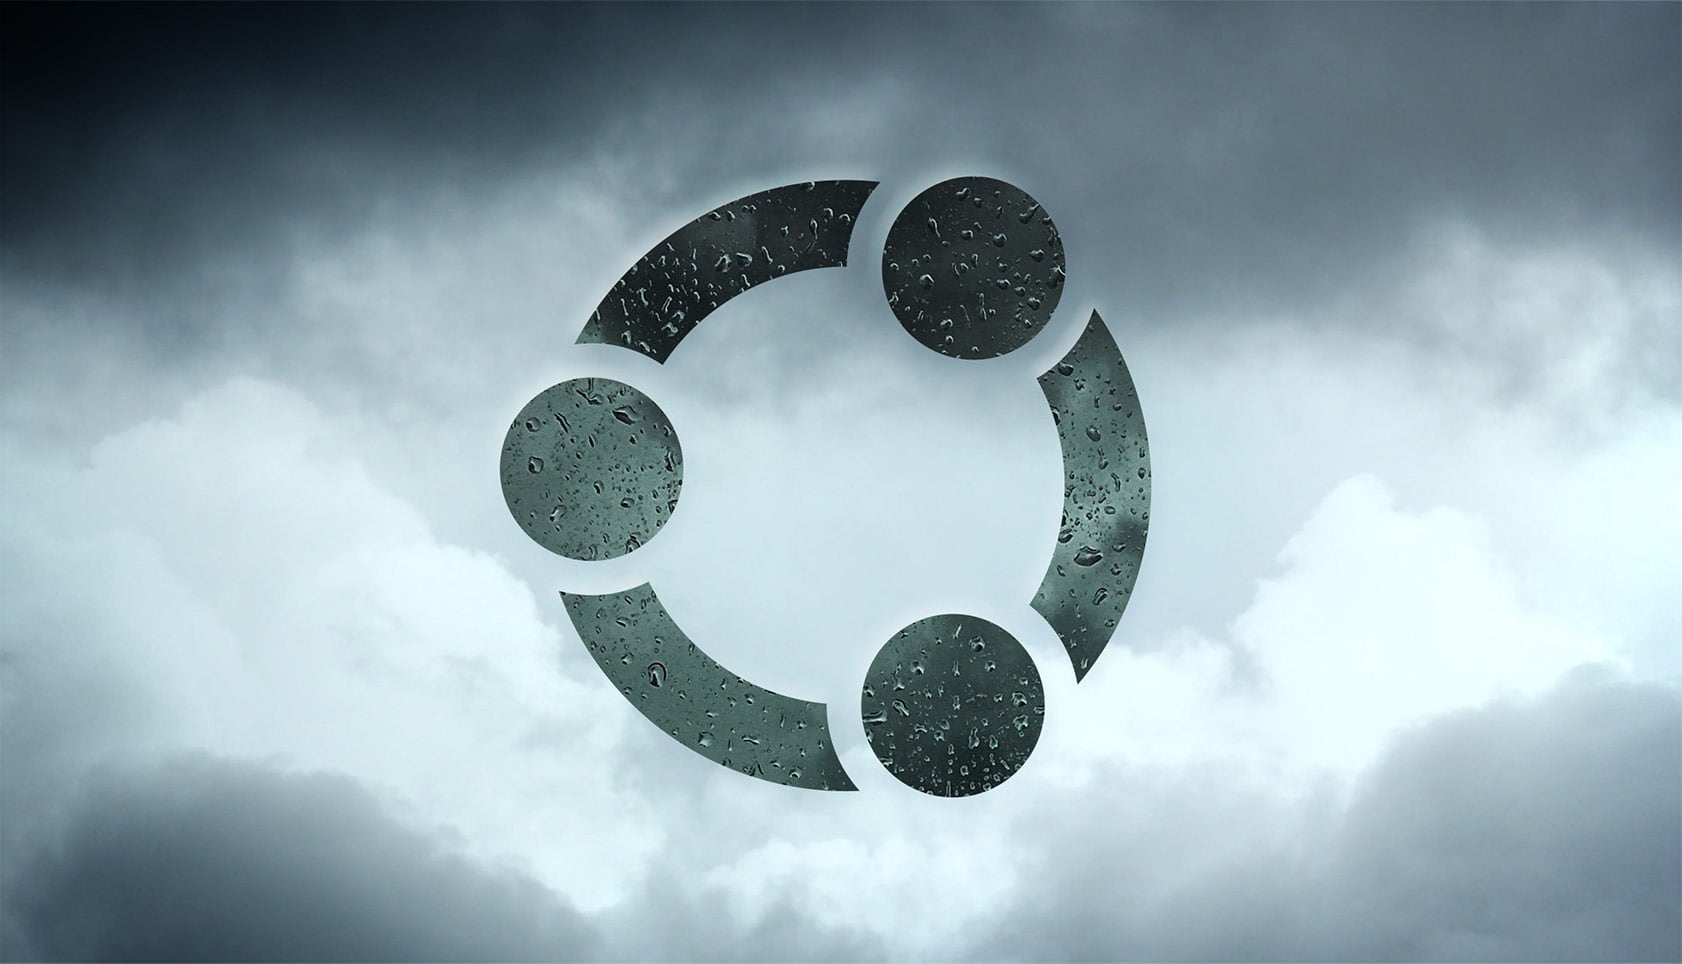 ubuntu logo on clouds